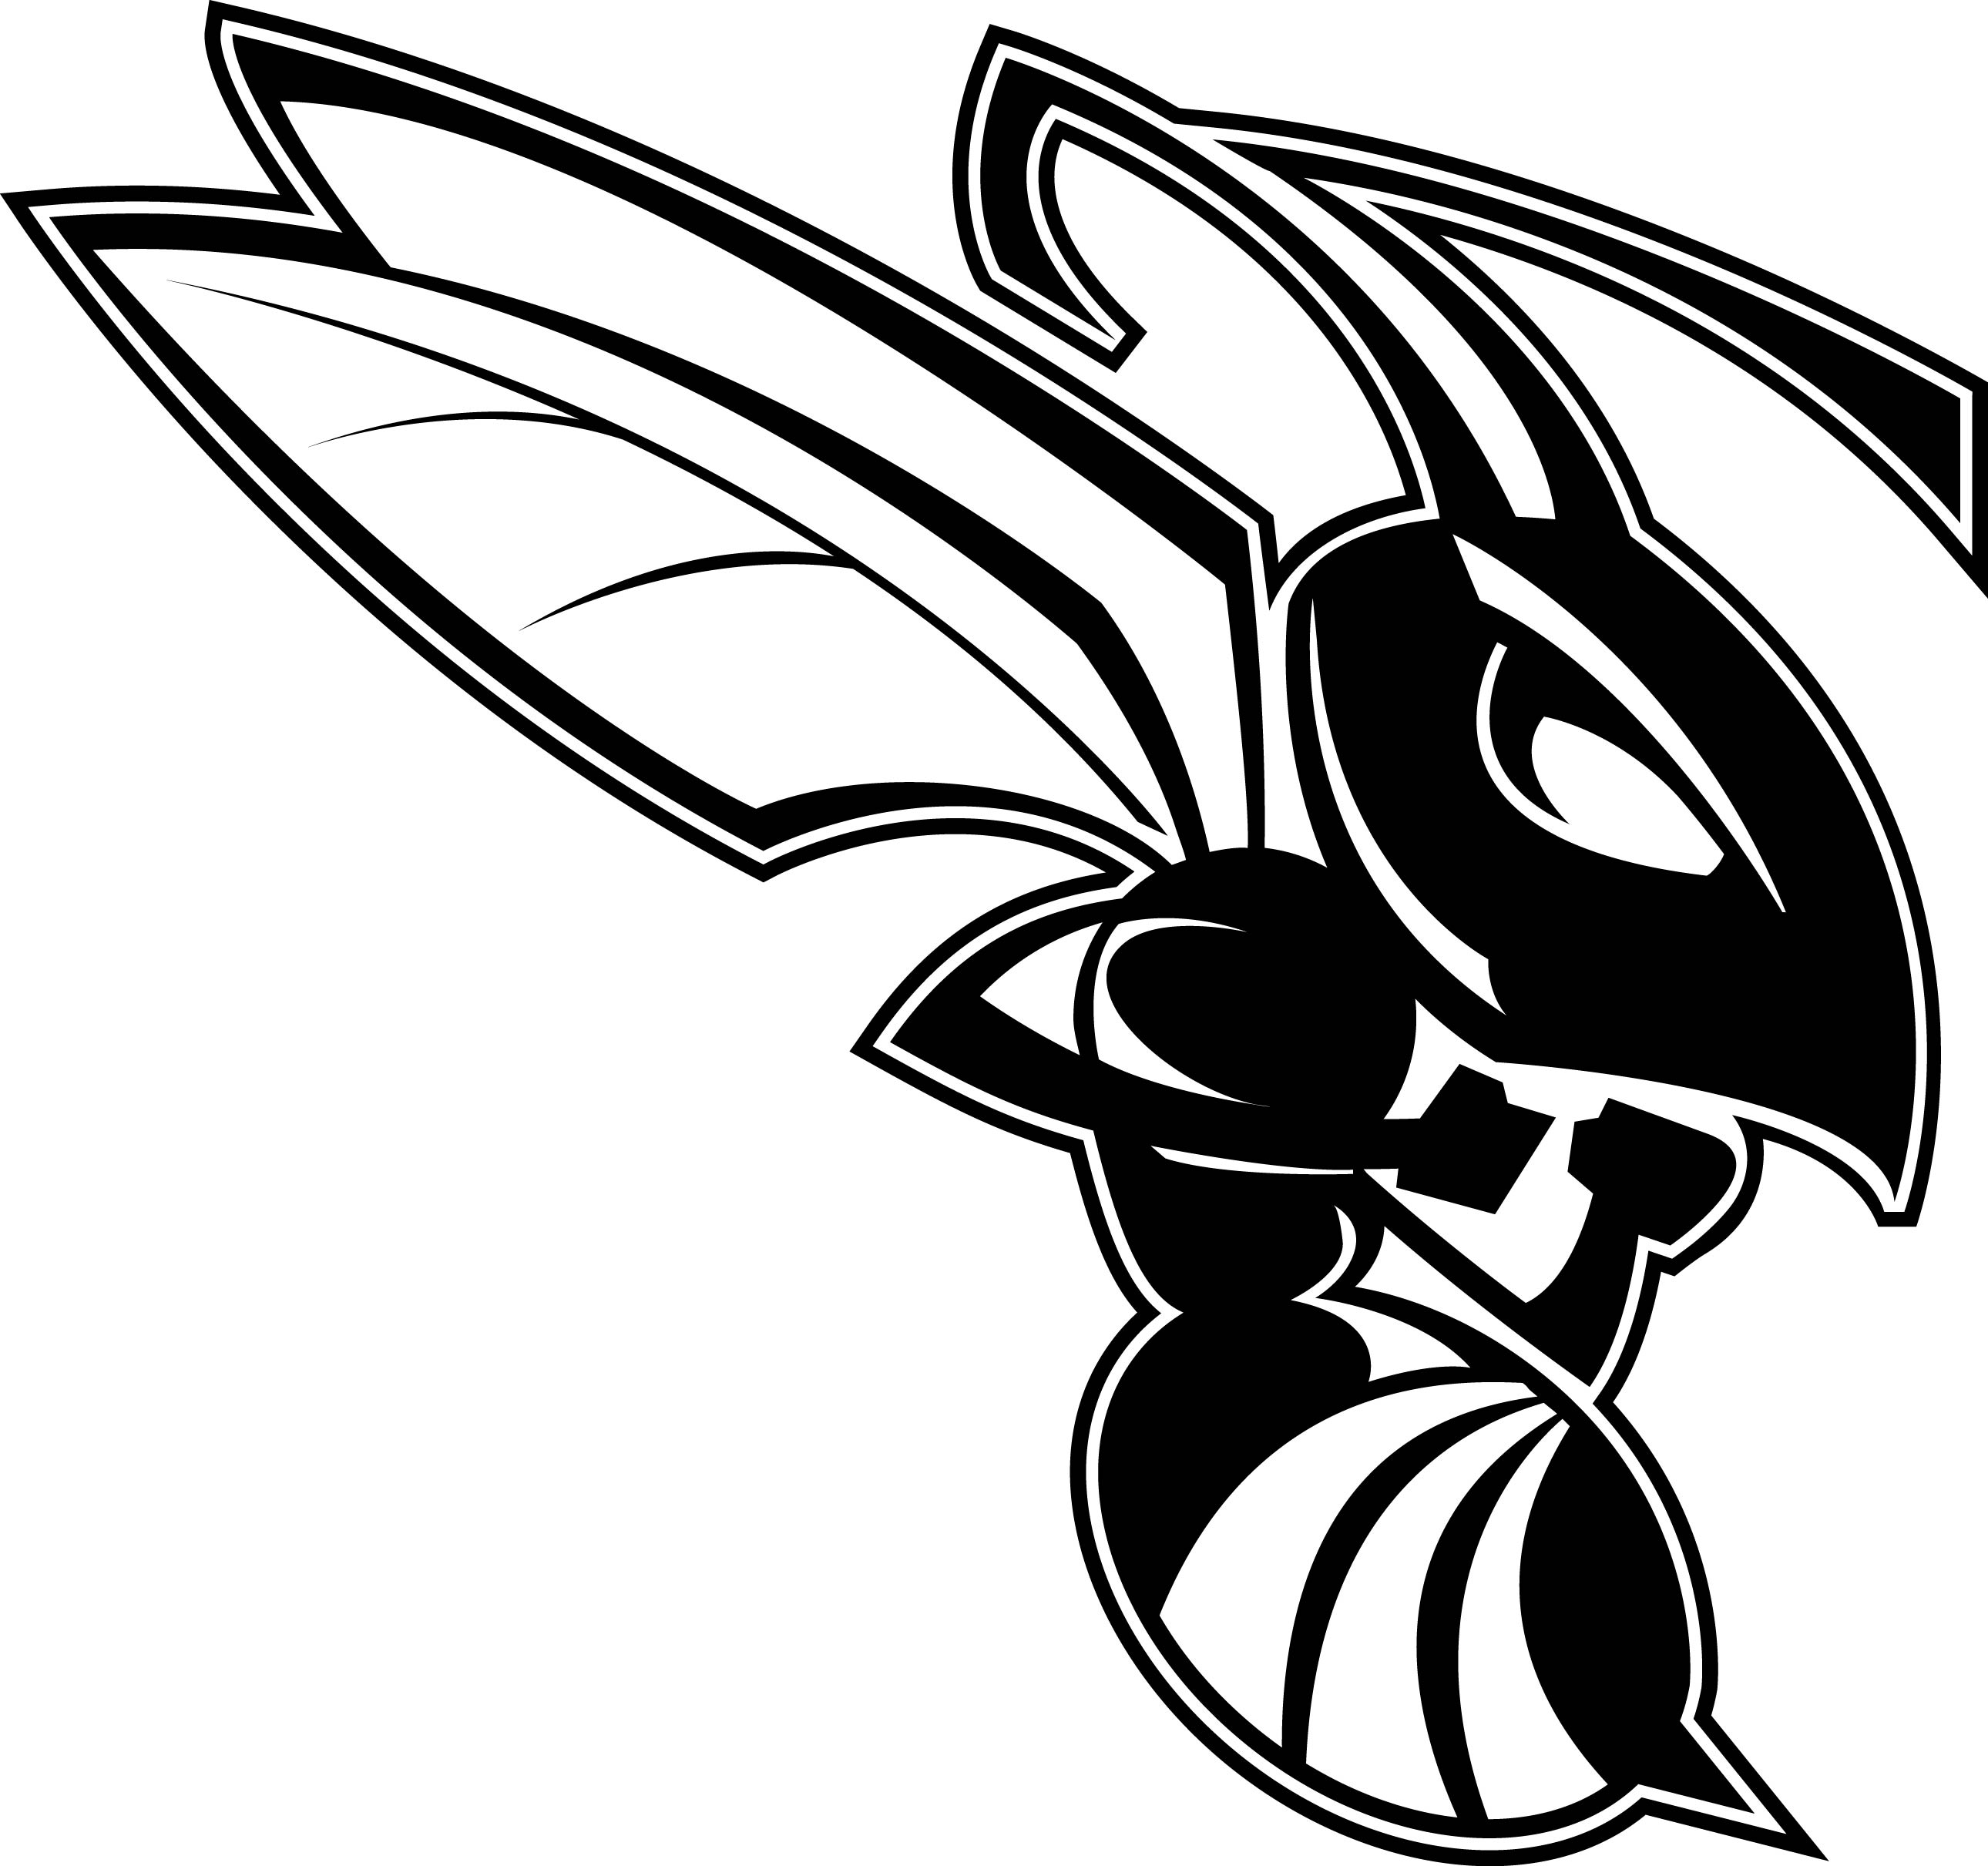 BrandK: Hornet Only Logo. Kalamazoo College